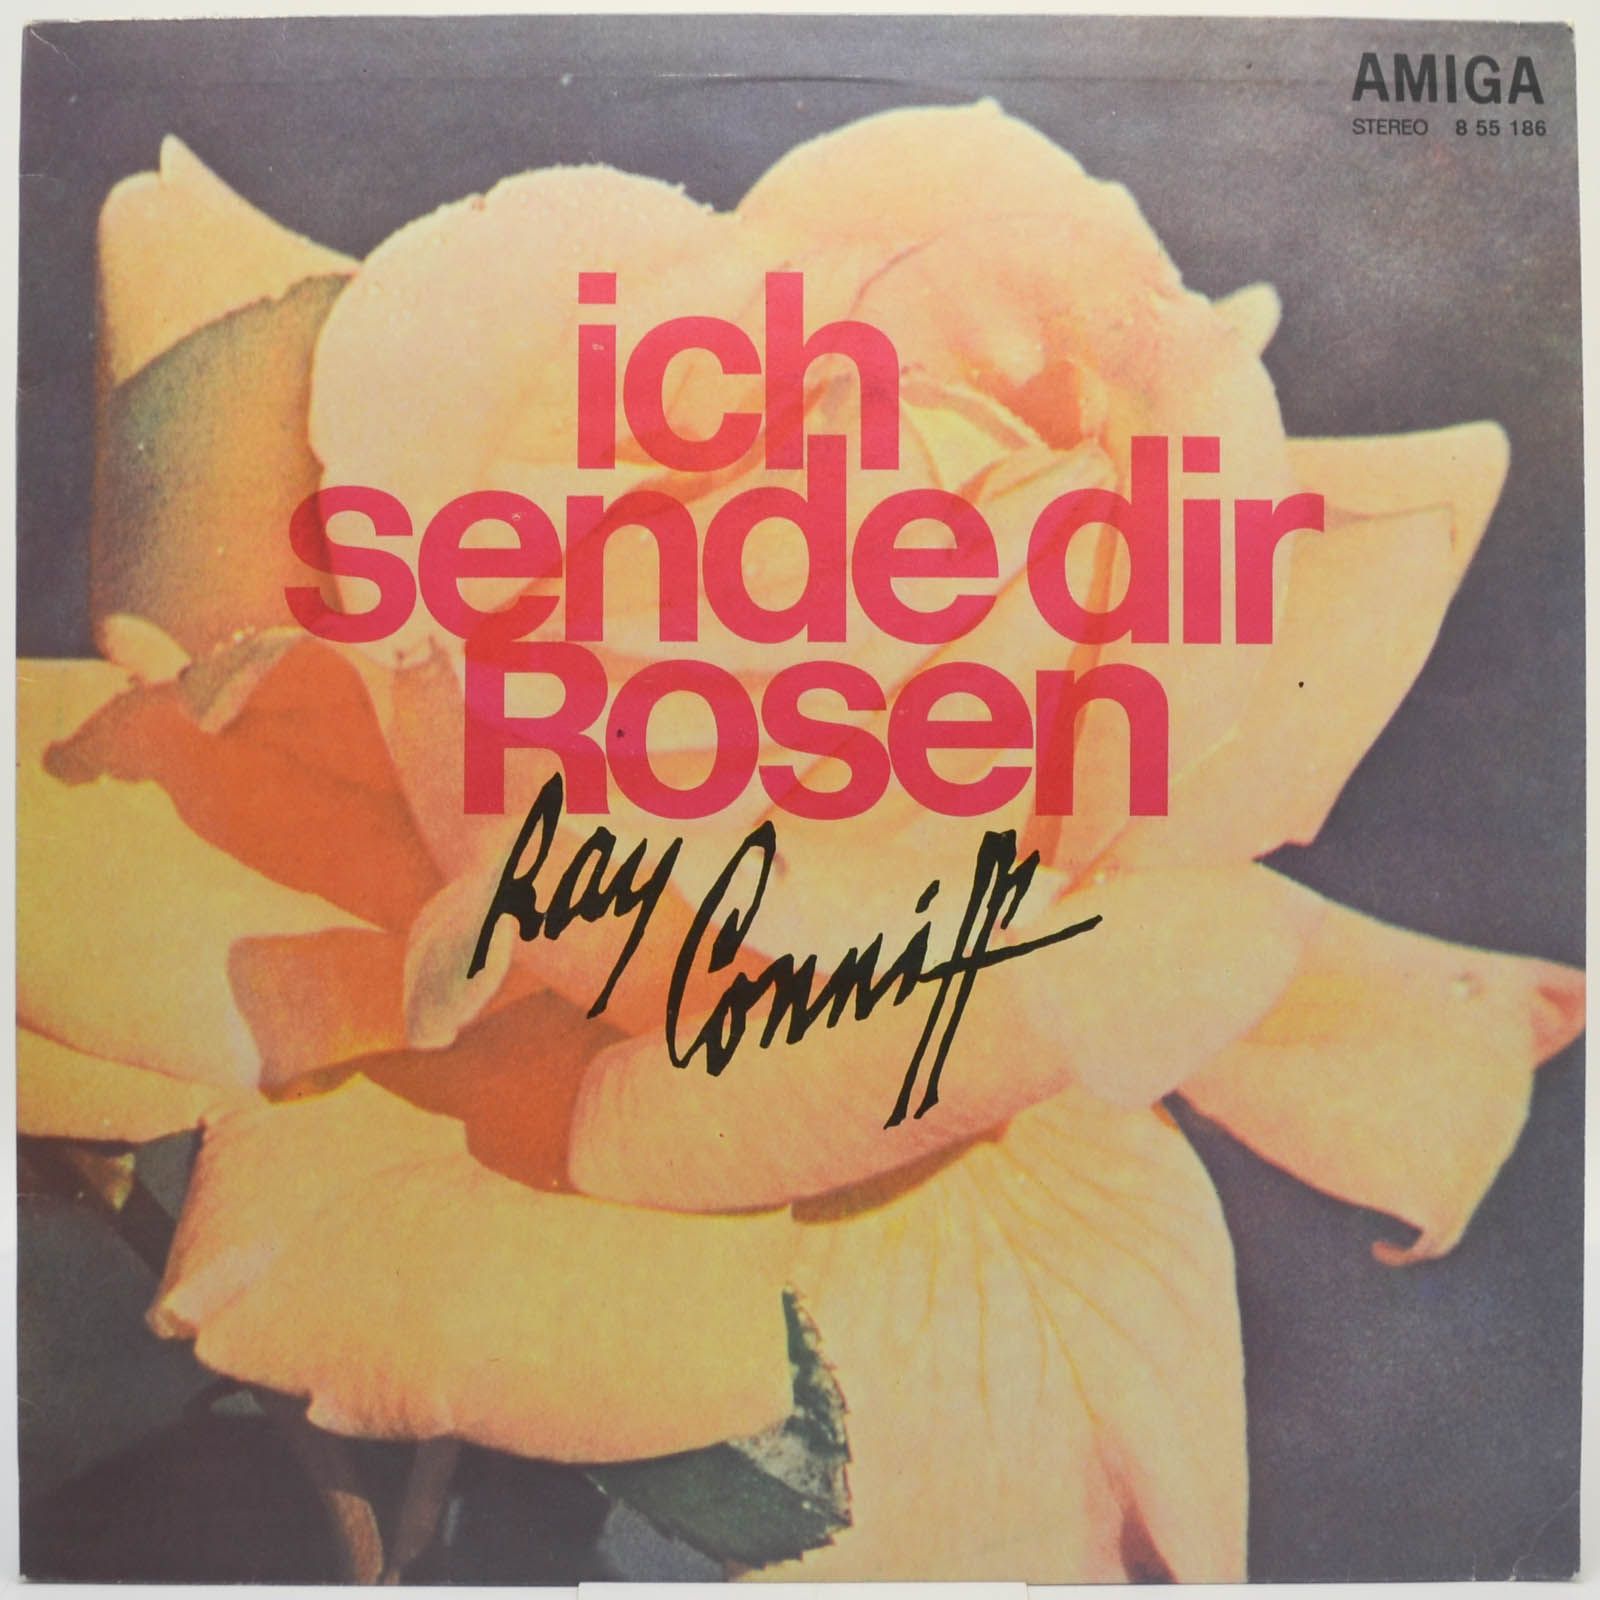 Ray Conniff — Ich Sende Dir Rosen, 1974